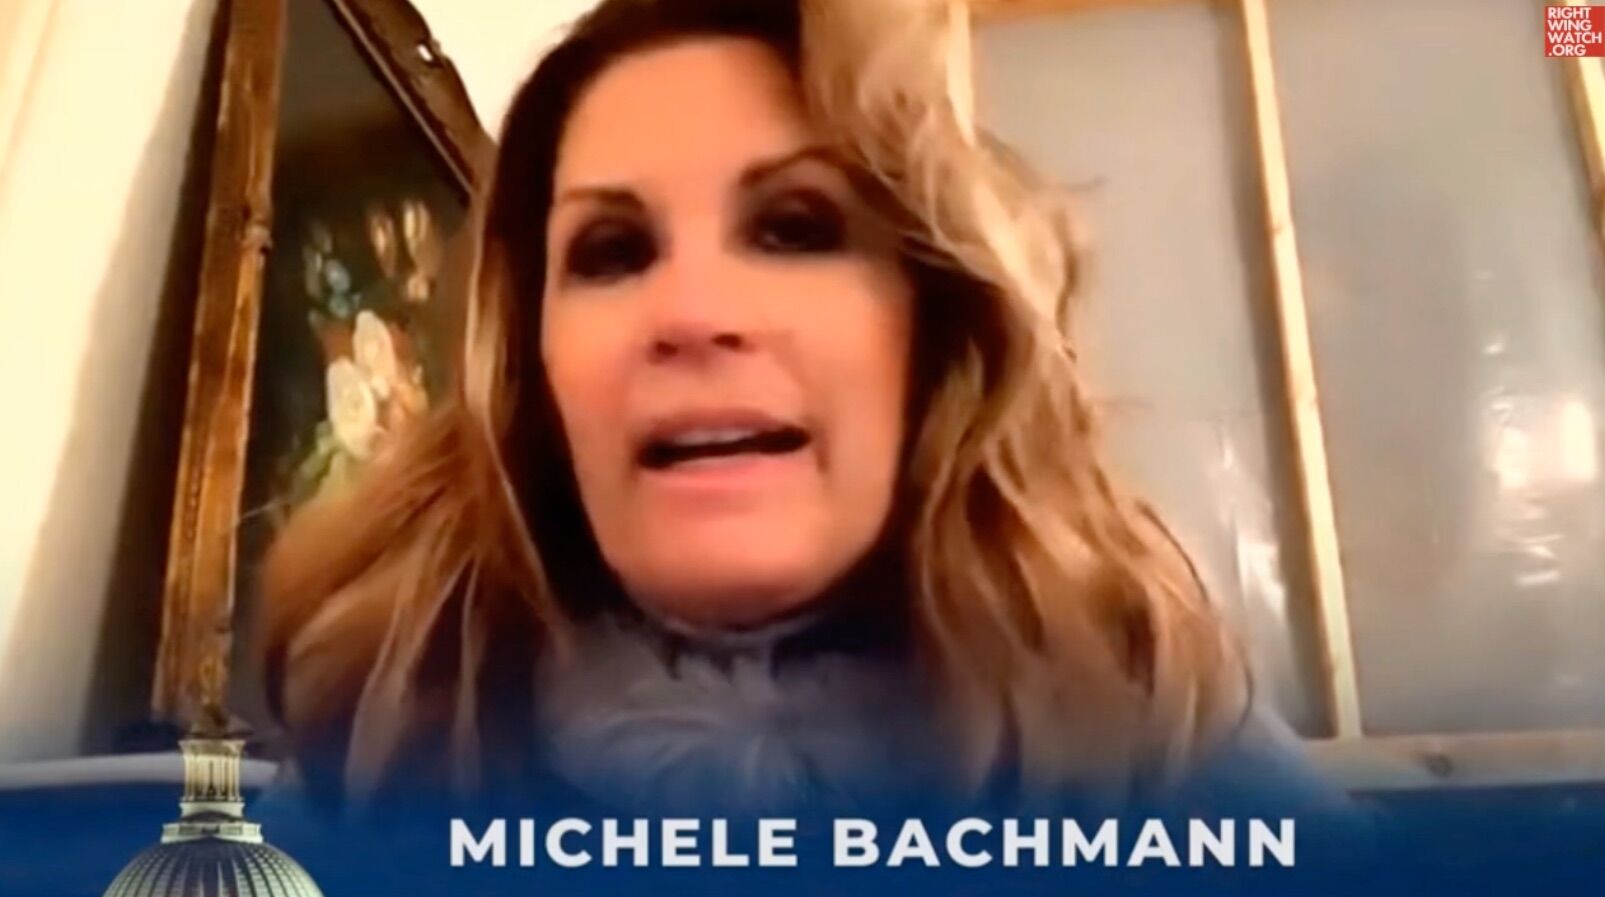 Former GOP congress member Michele Bachmann